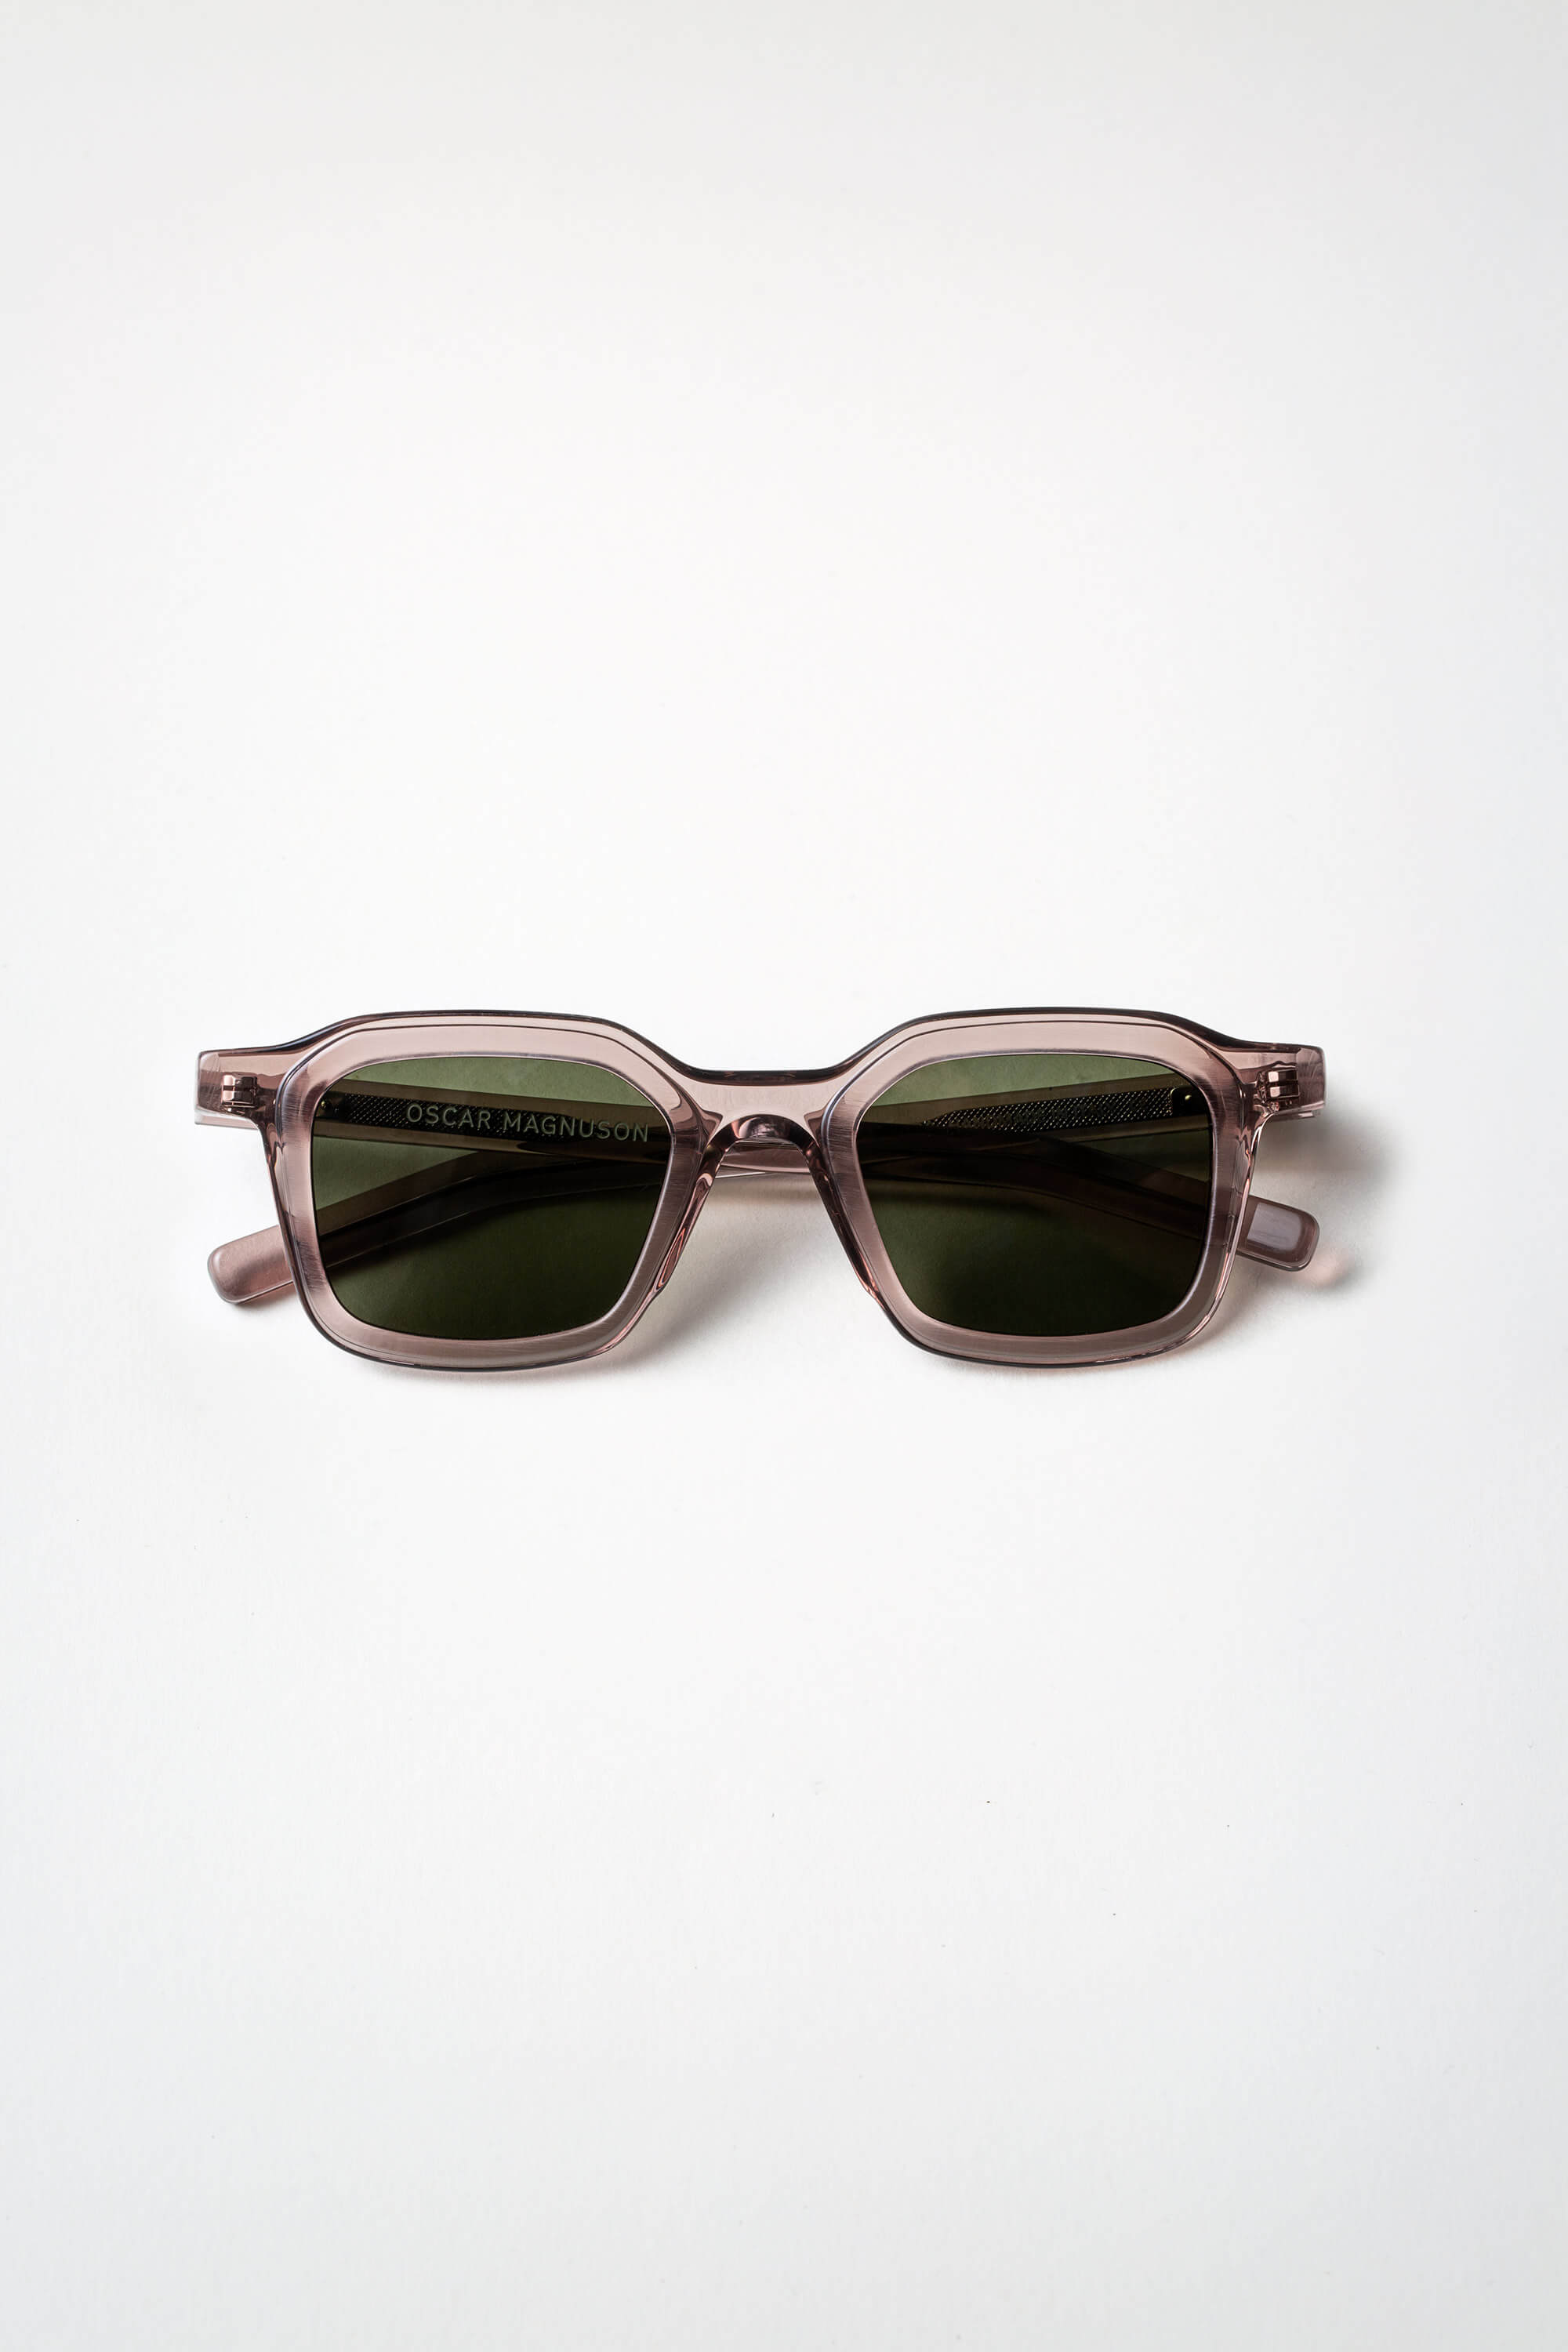 sunglasses – Oscar Magnuson Spectacles